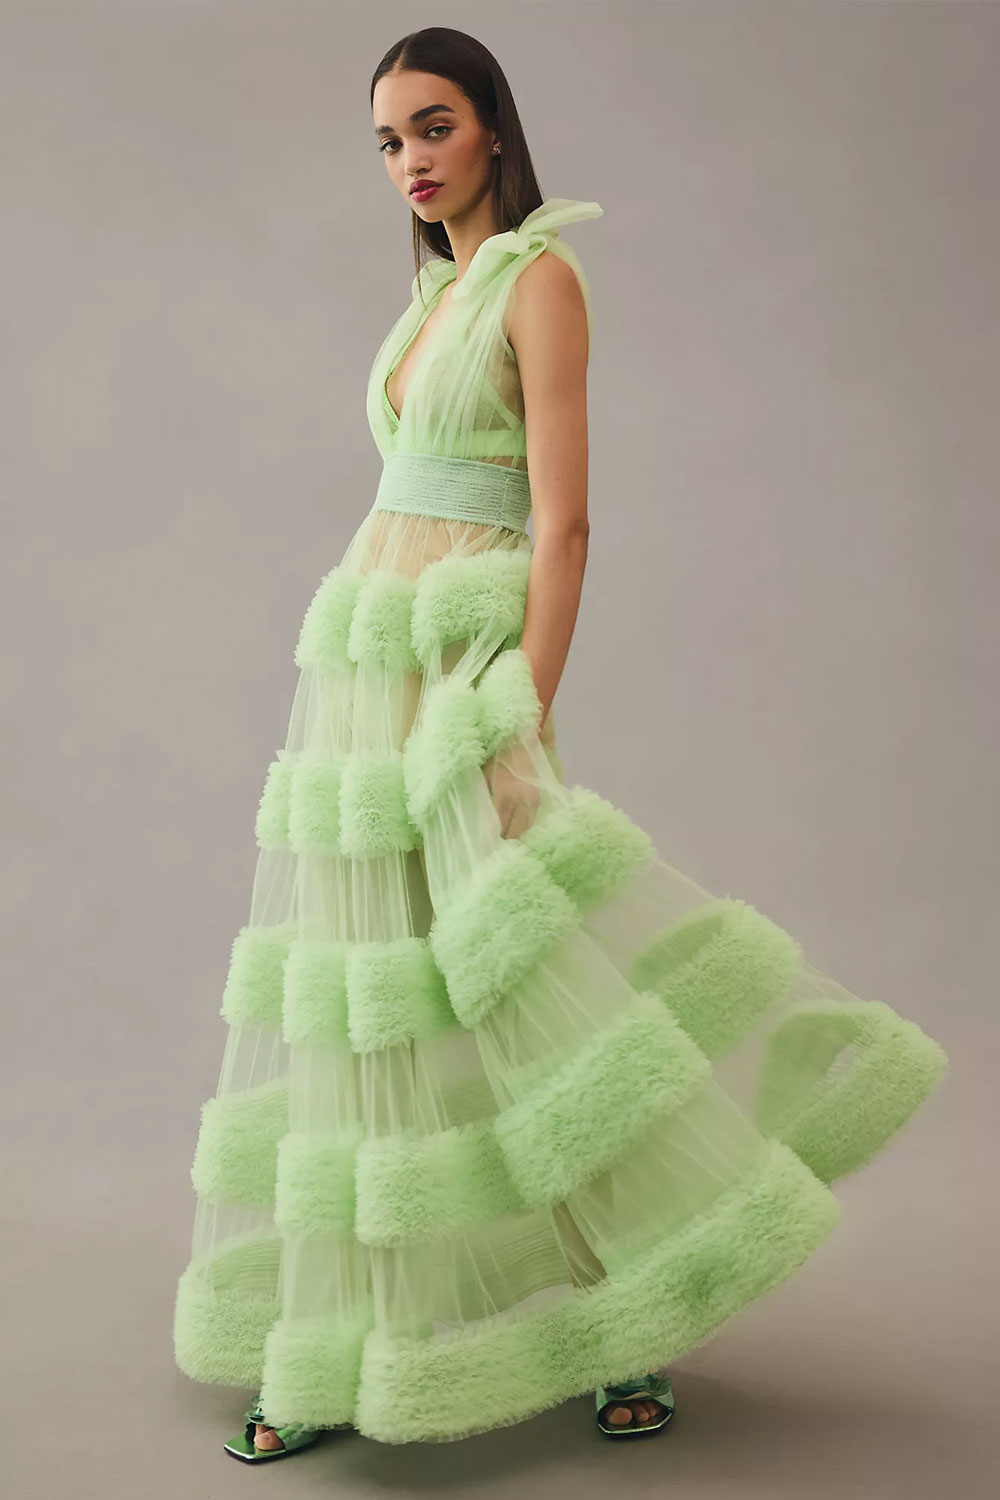 Unique green tulle wedding guest dresses